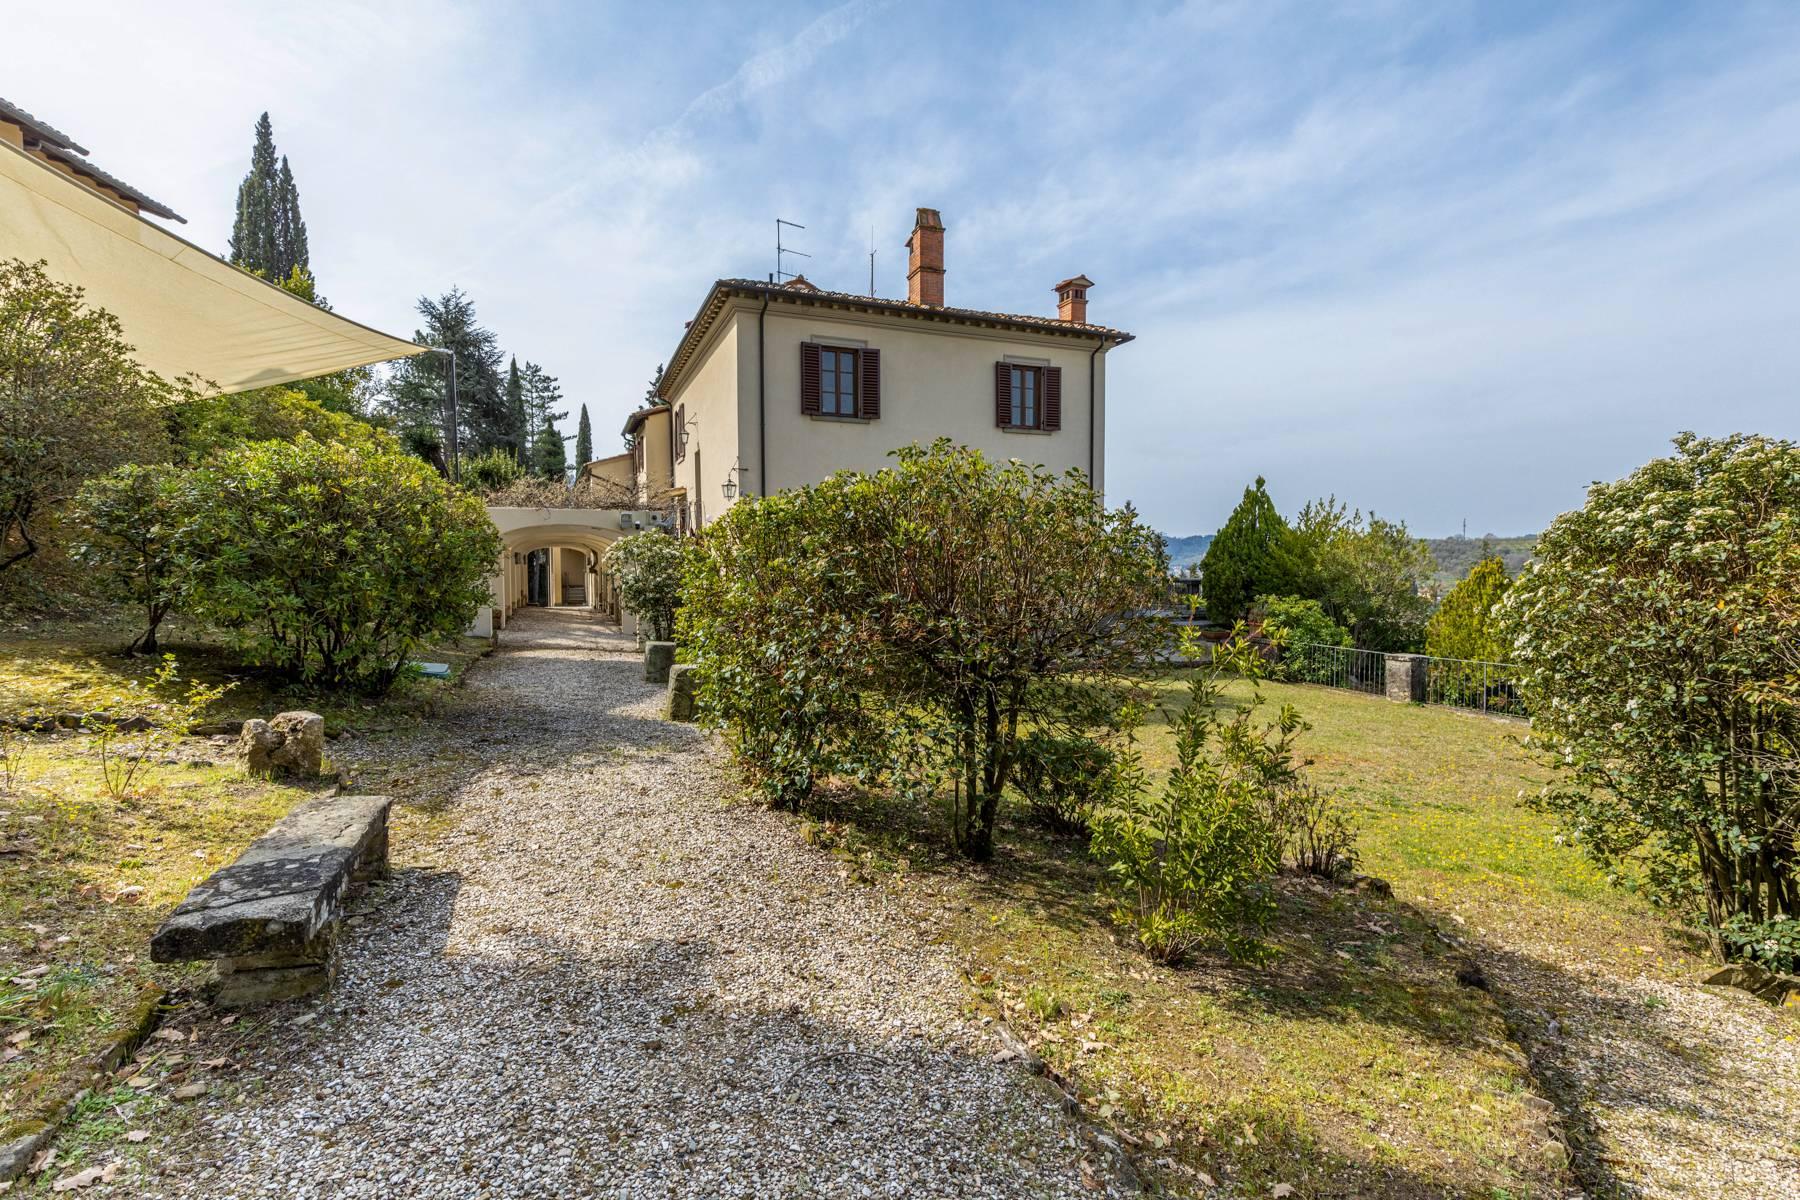 Historical villa dating back to the XVII century overlooking Arezzo - 1